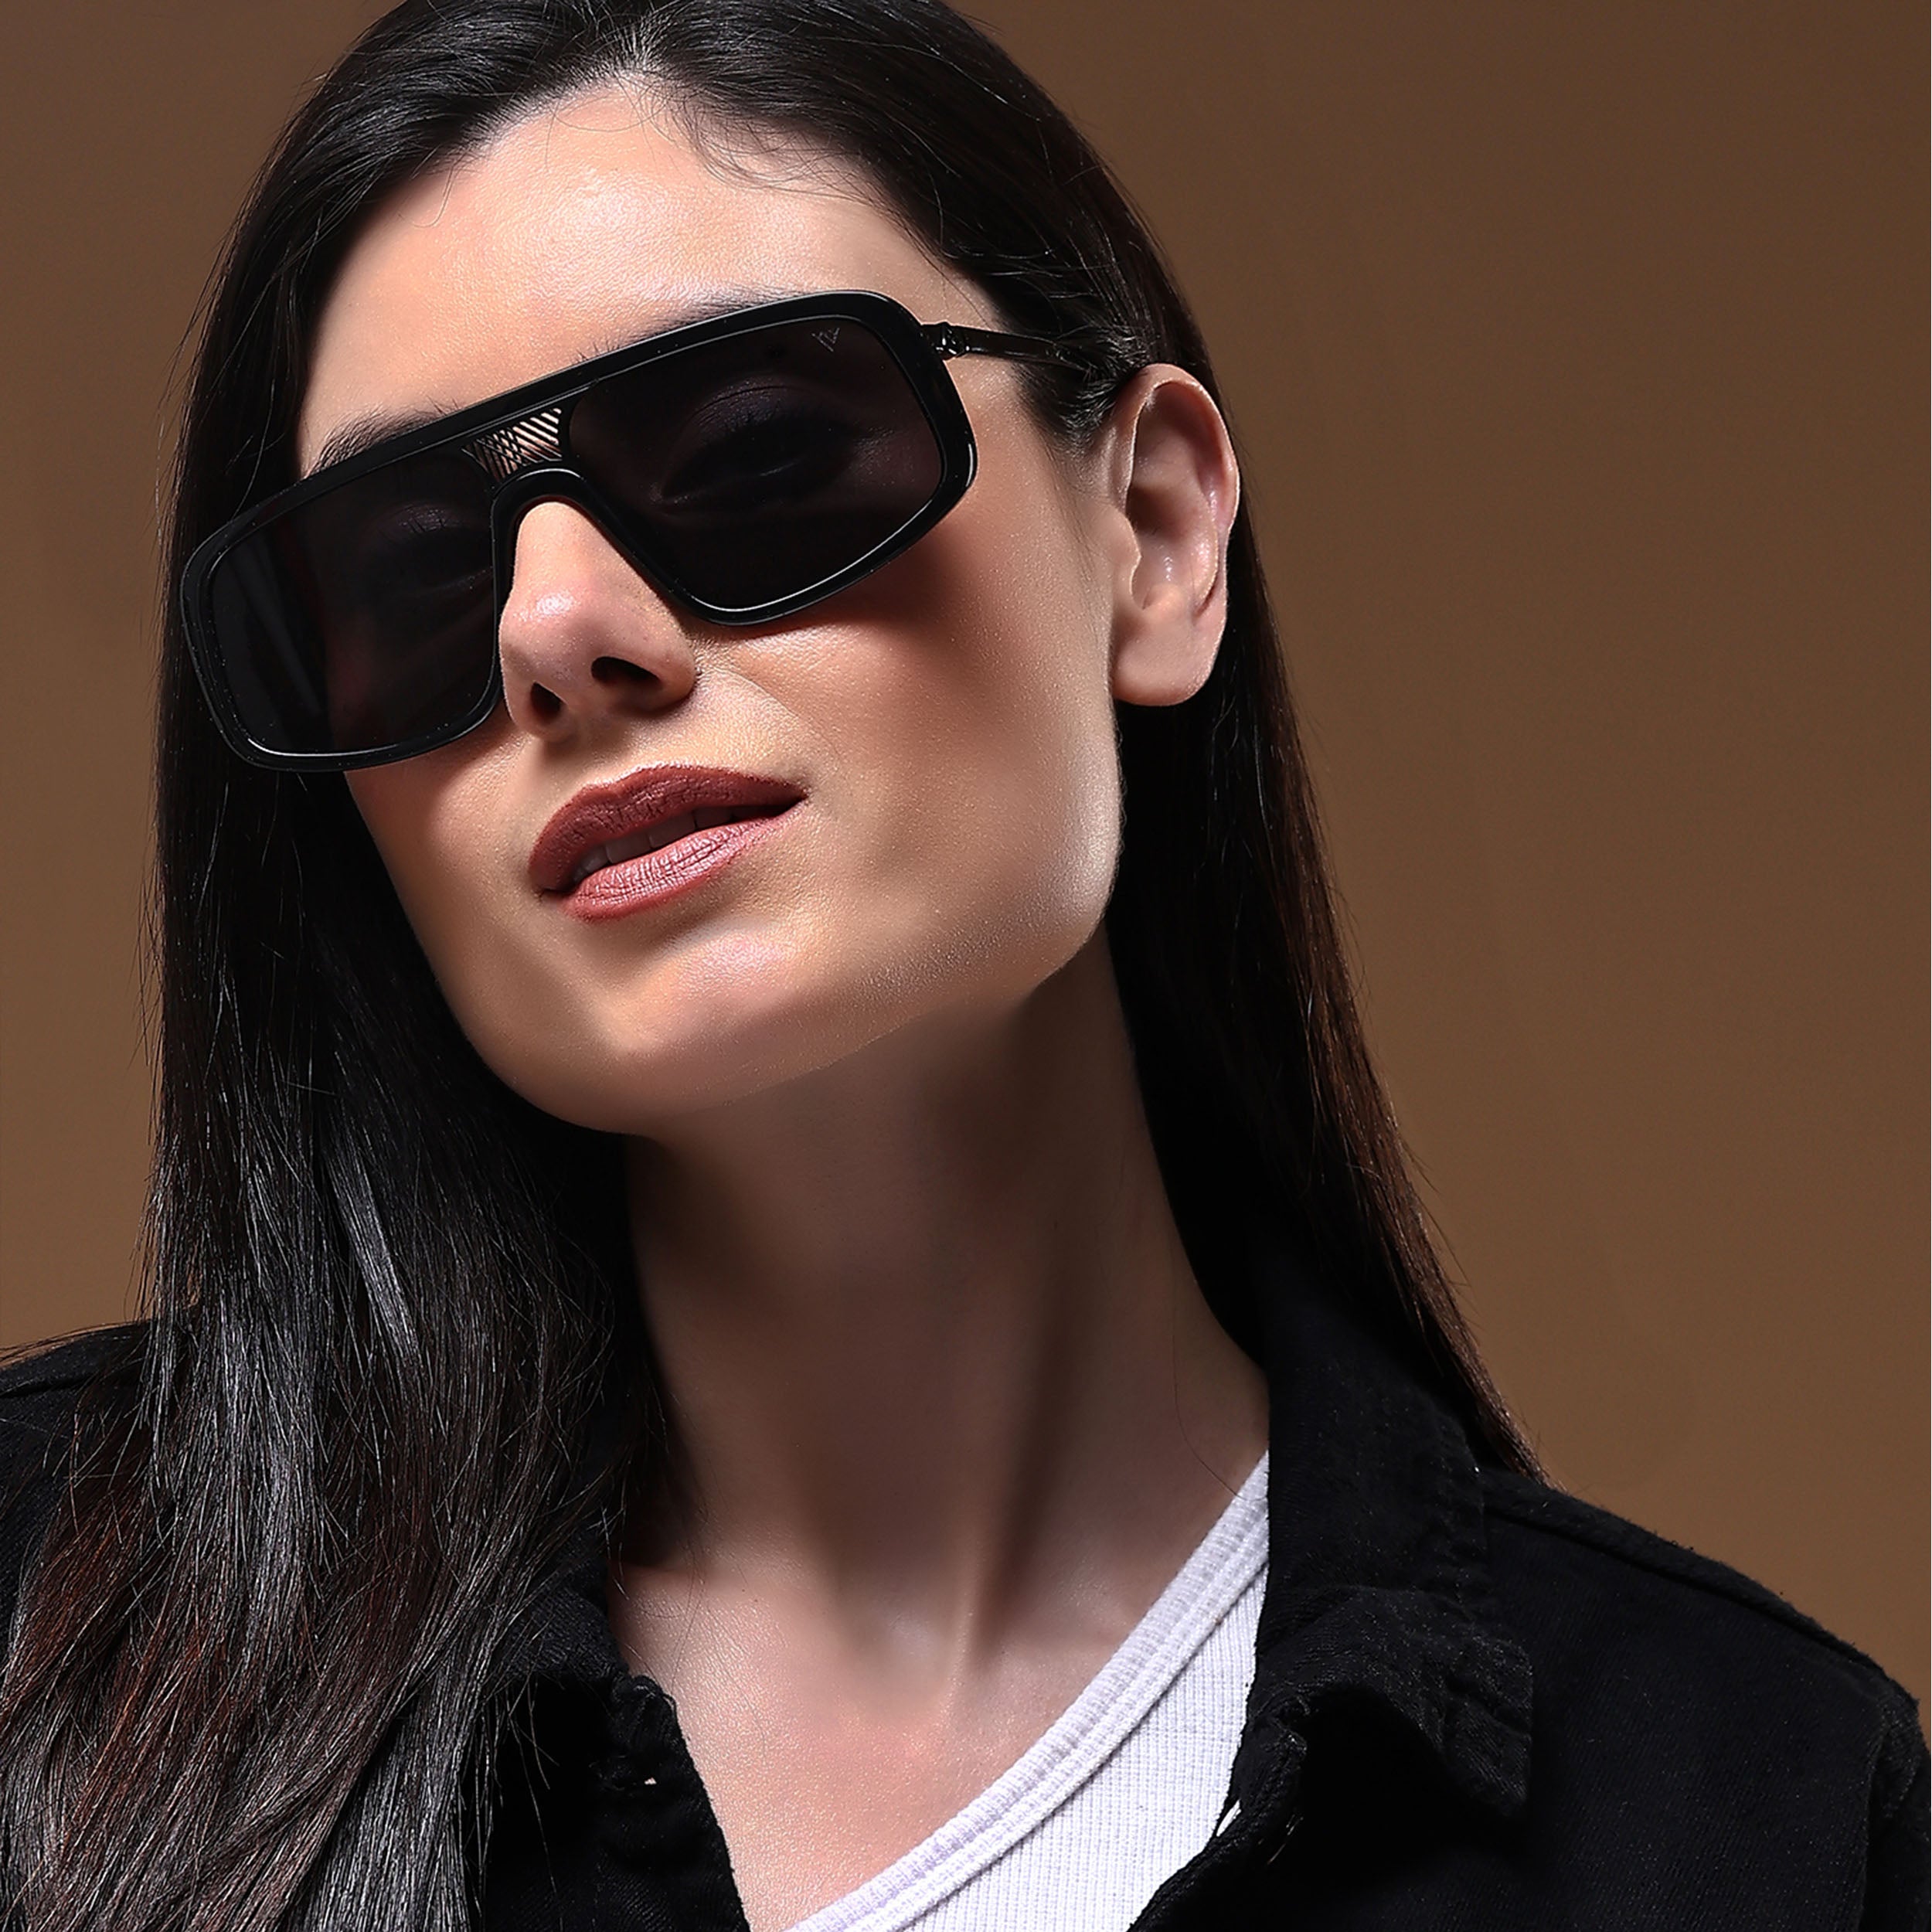 Voyage Black Wayfarer Sunglasses for Men & Women - MG4018